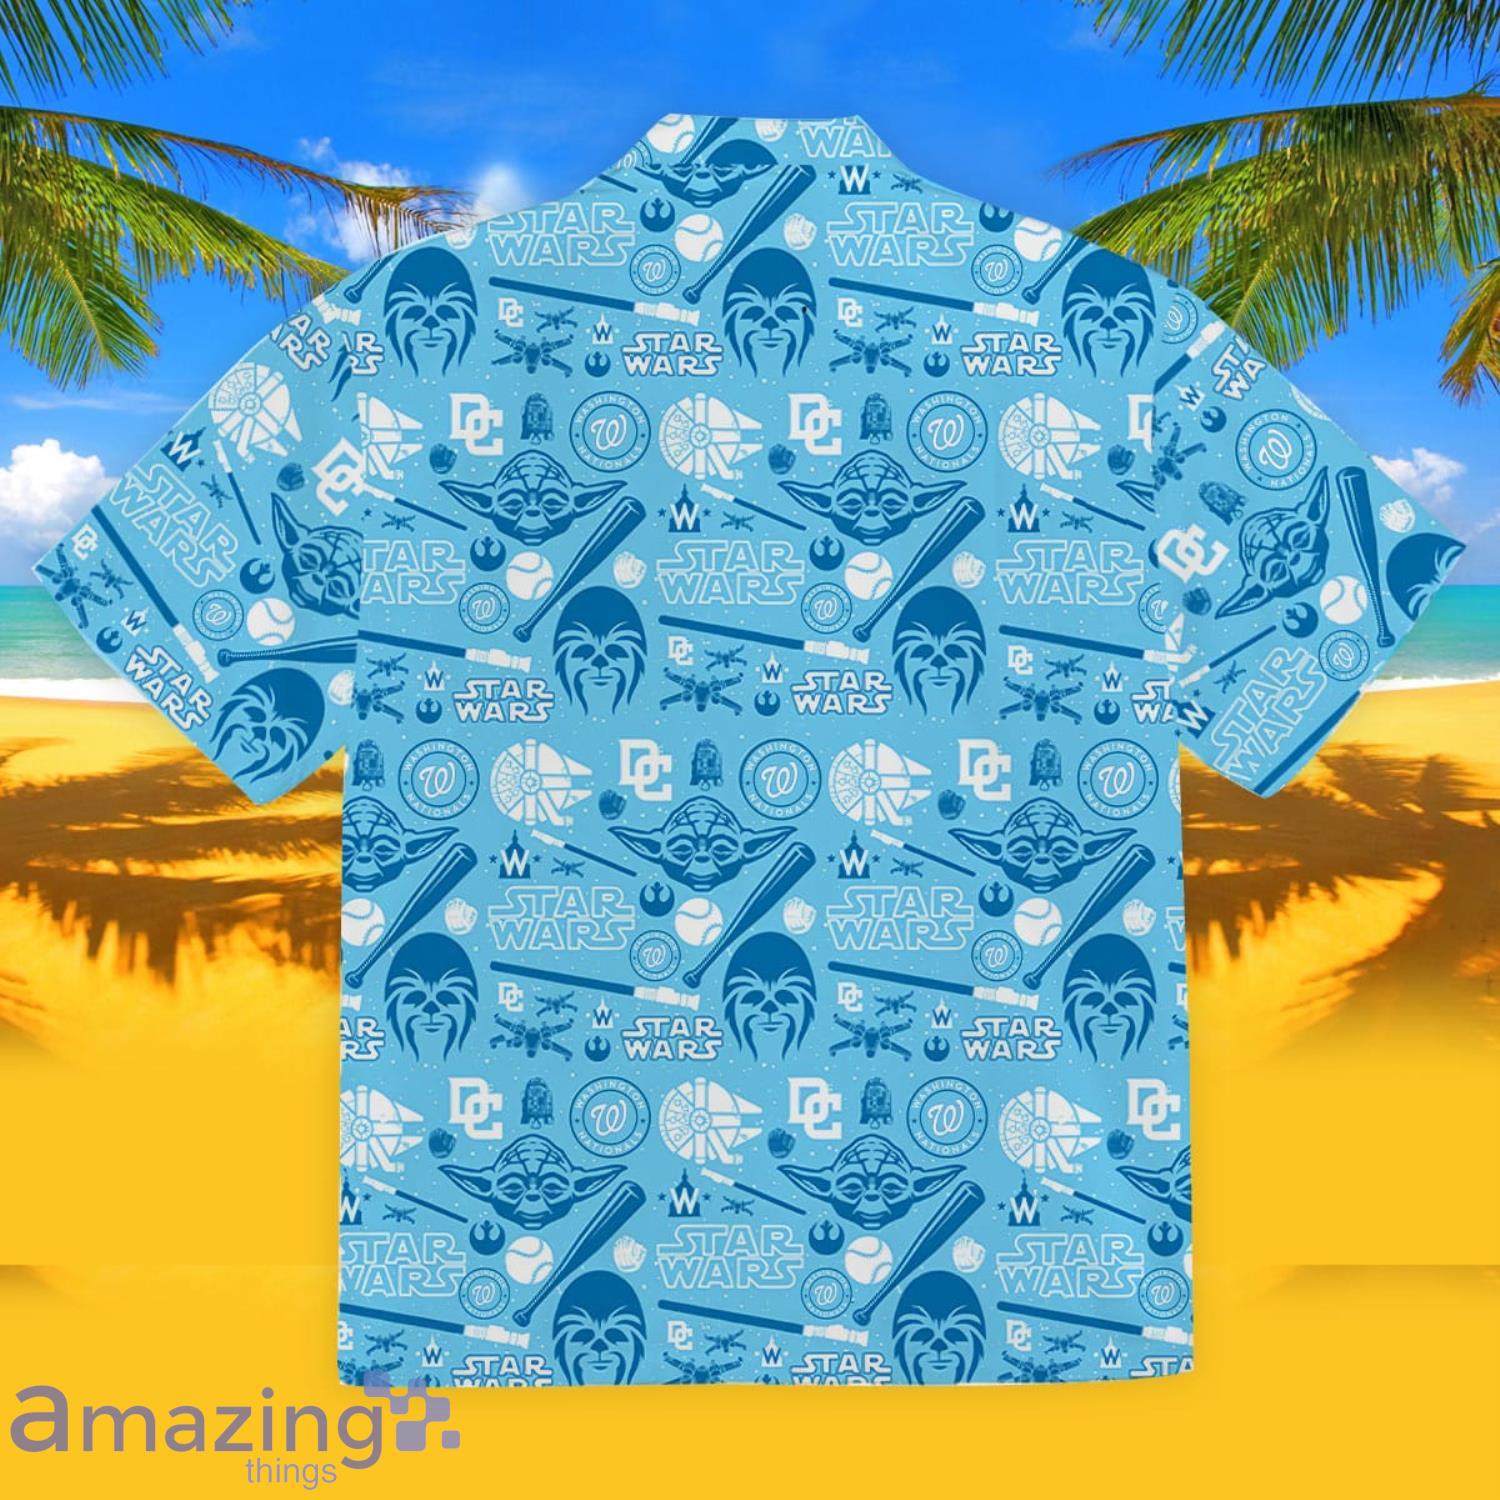 nationals hawaiian shirt giveaway